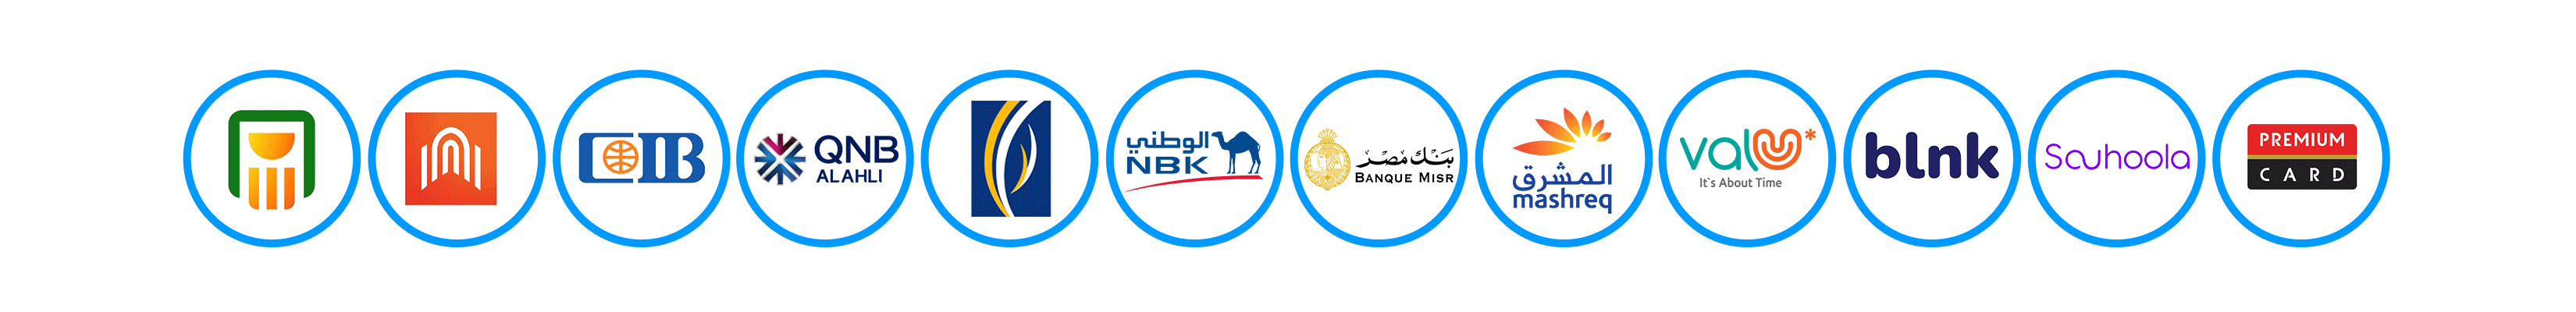 banks-icon-1